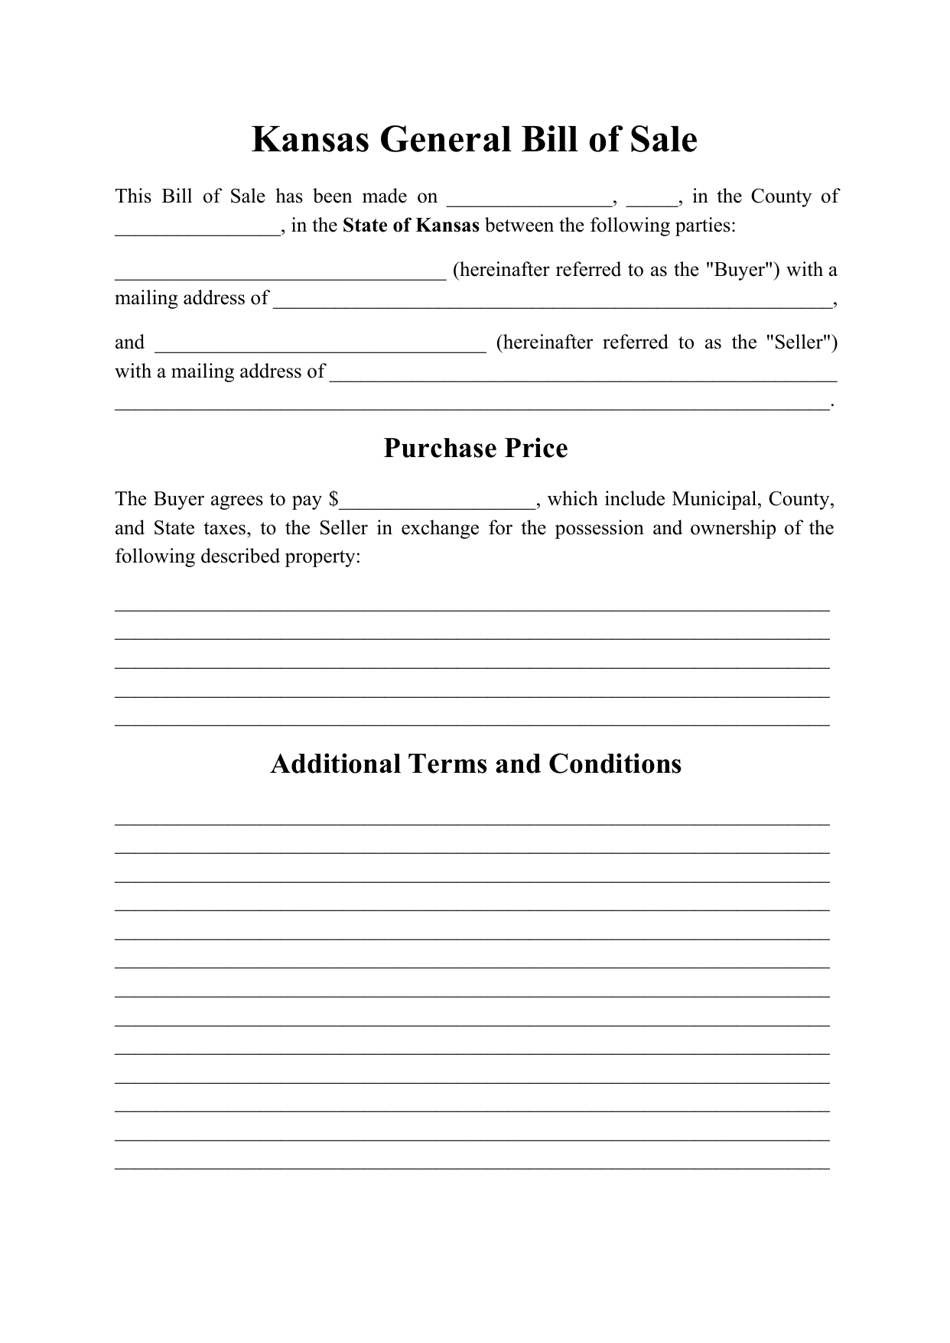 Kansas Generic Bill of Sale Form Download Printable PDF | Templateroller